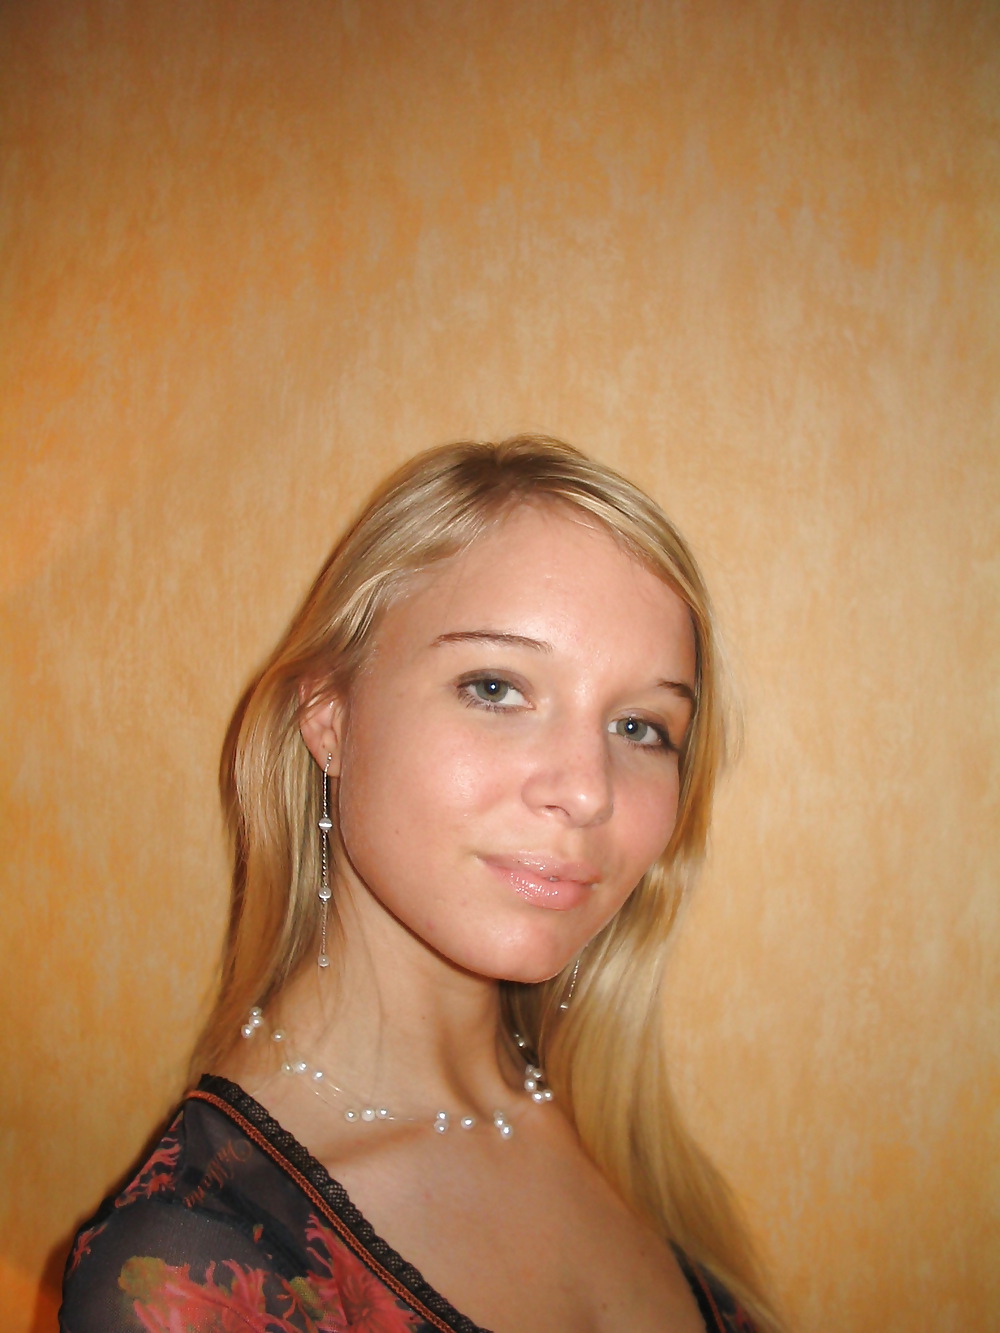 Hot ex ragazza russa teenager
 #7484997